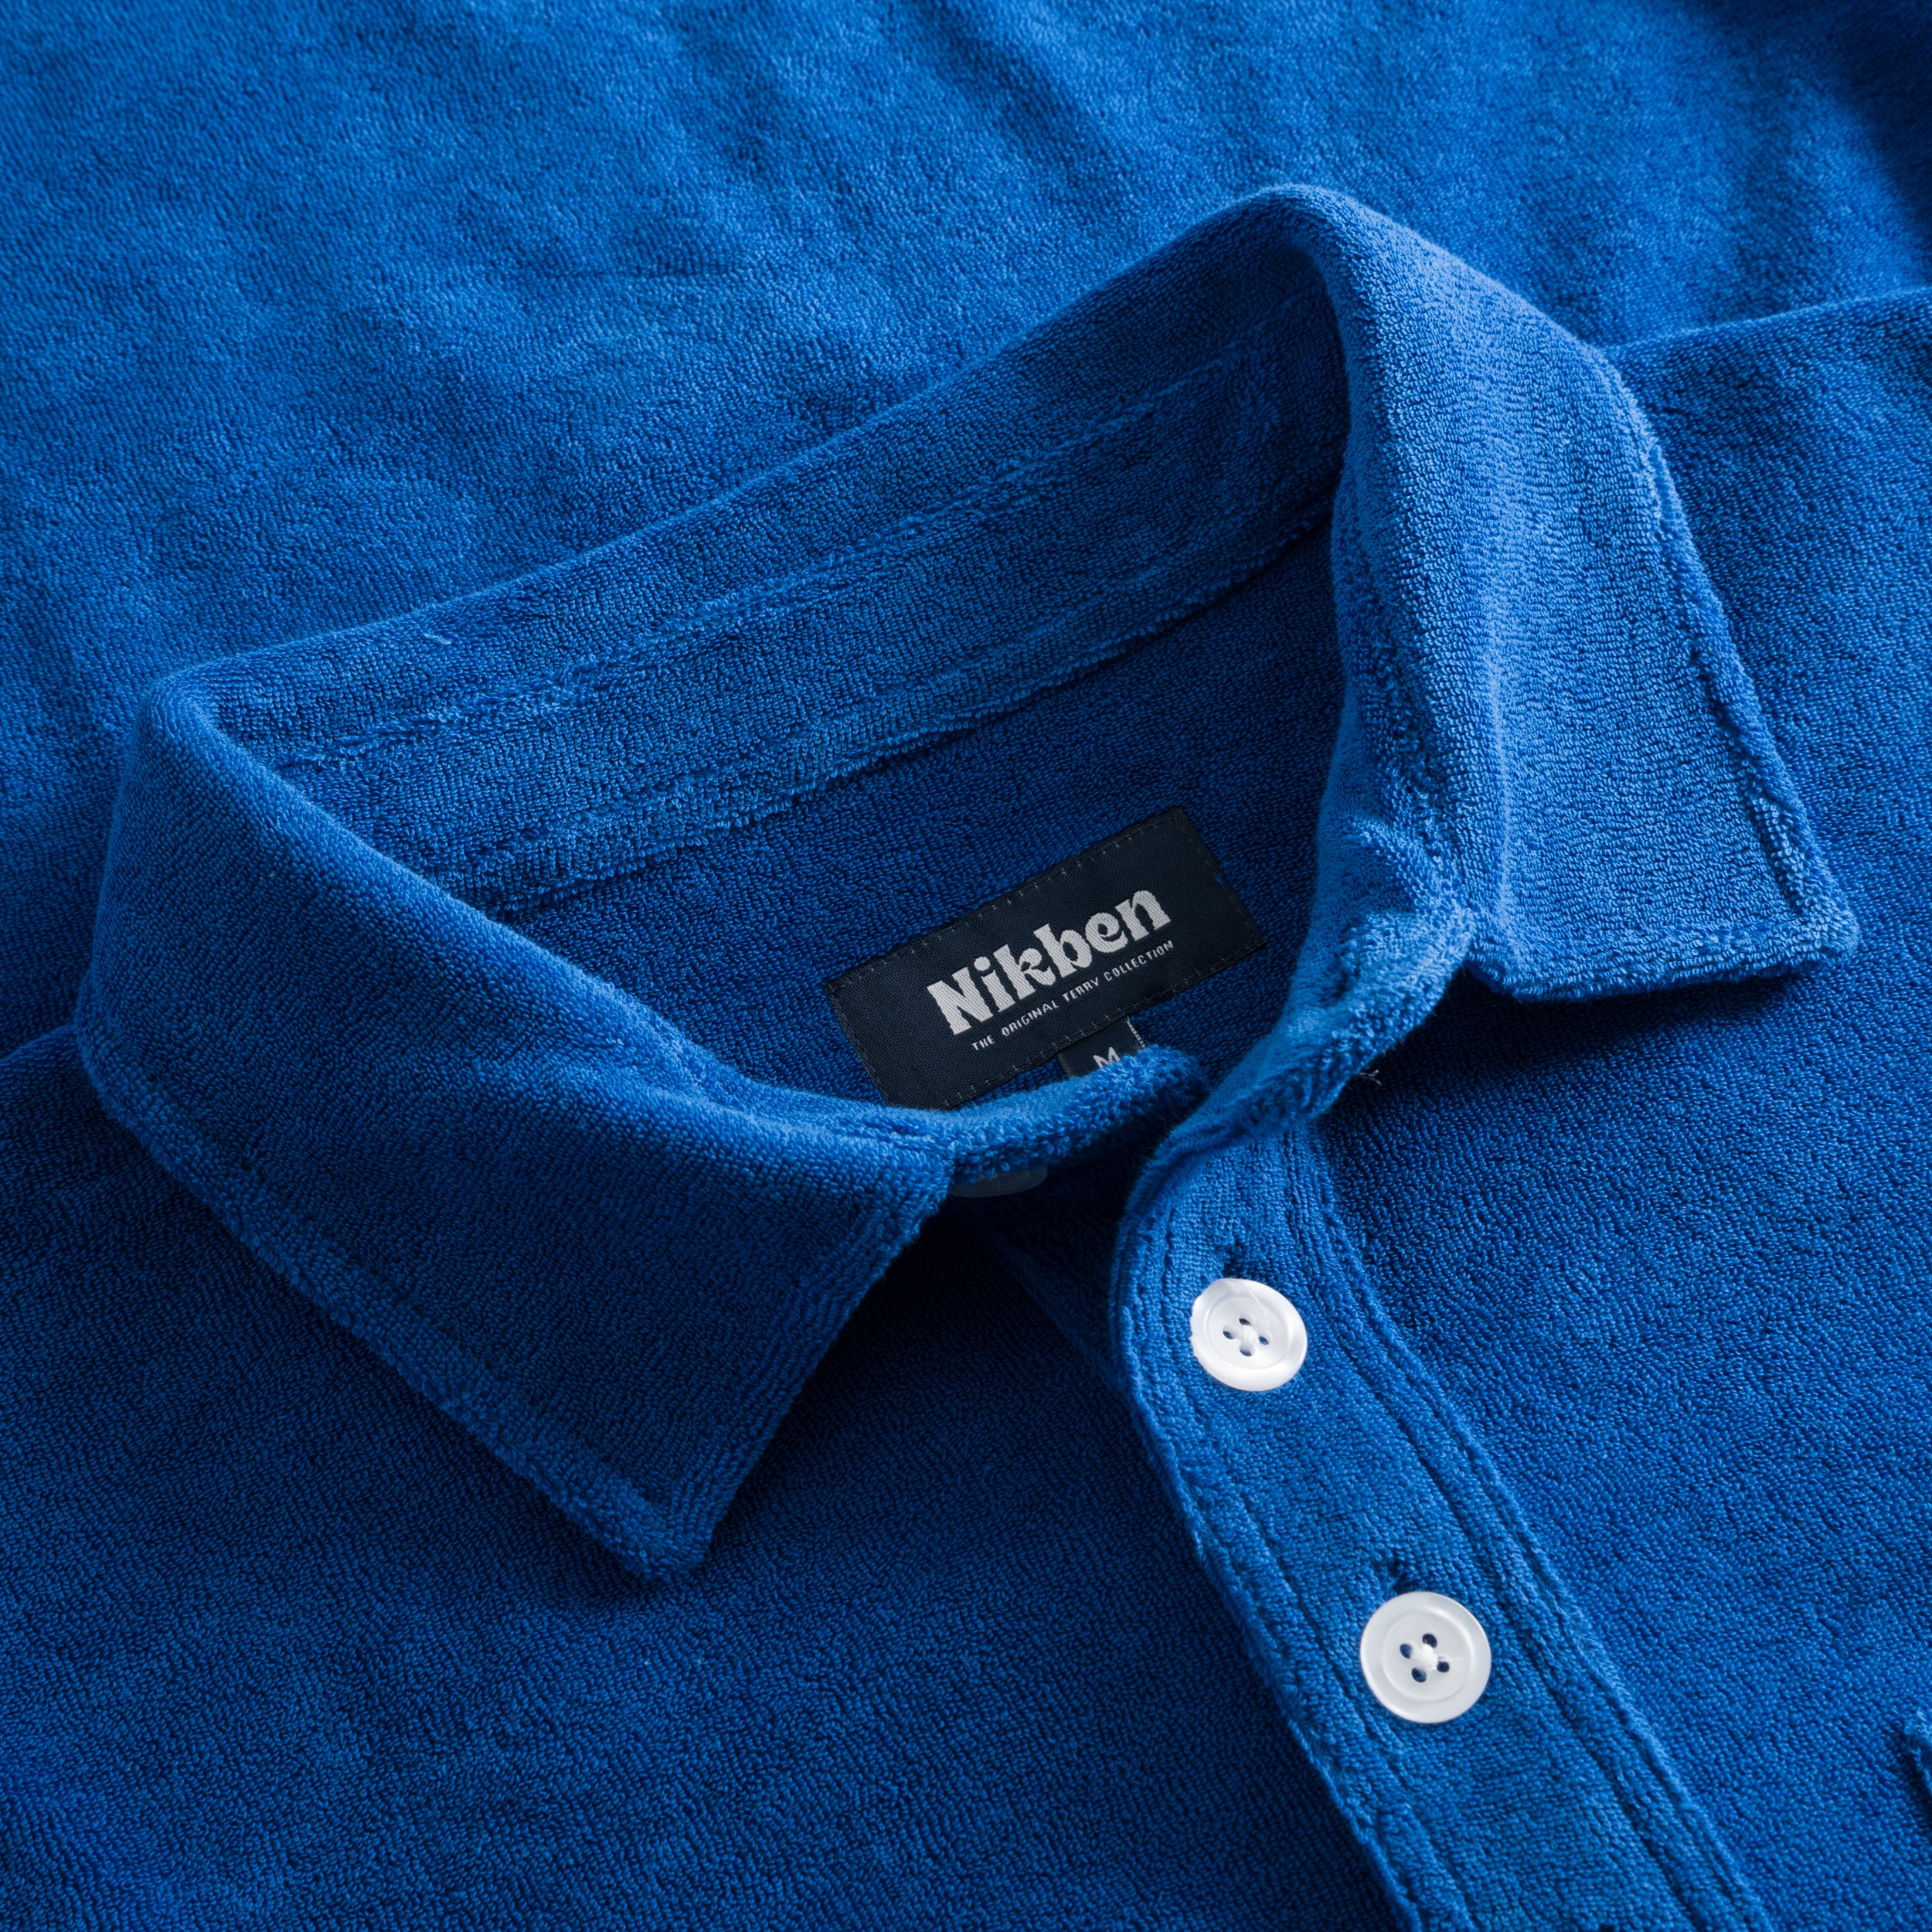 Collar on indigo blue shirt in terry towelling fabric